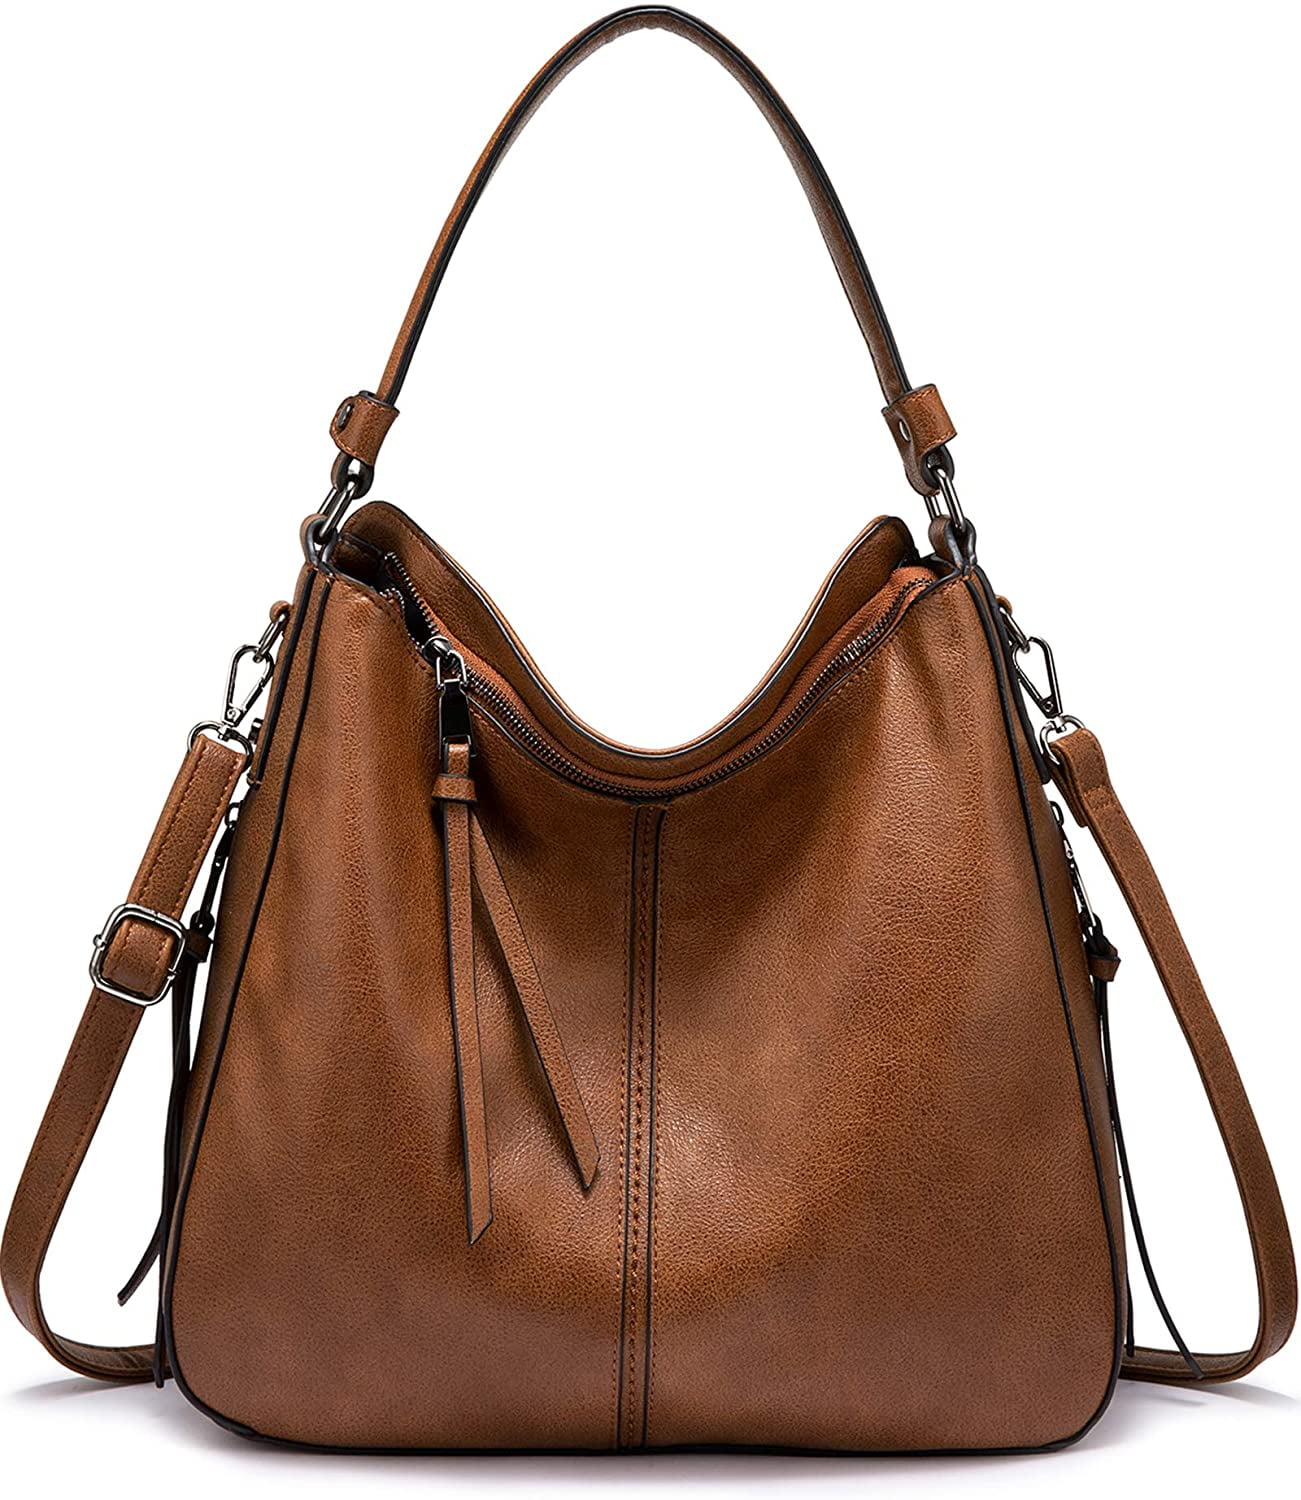 PIKADINGNIS Work Bags for Women Large Tote Bag Waterproof Travel Laptop Bag  Designer Hobo Nylon Shoulder Bag 